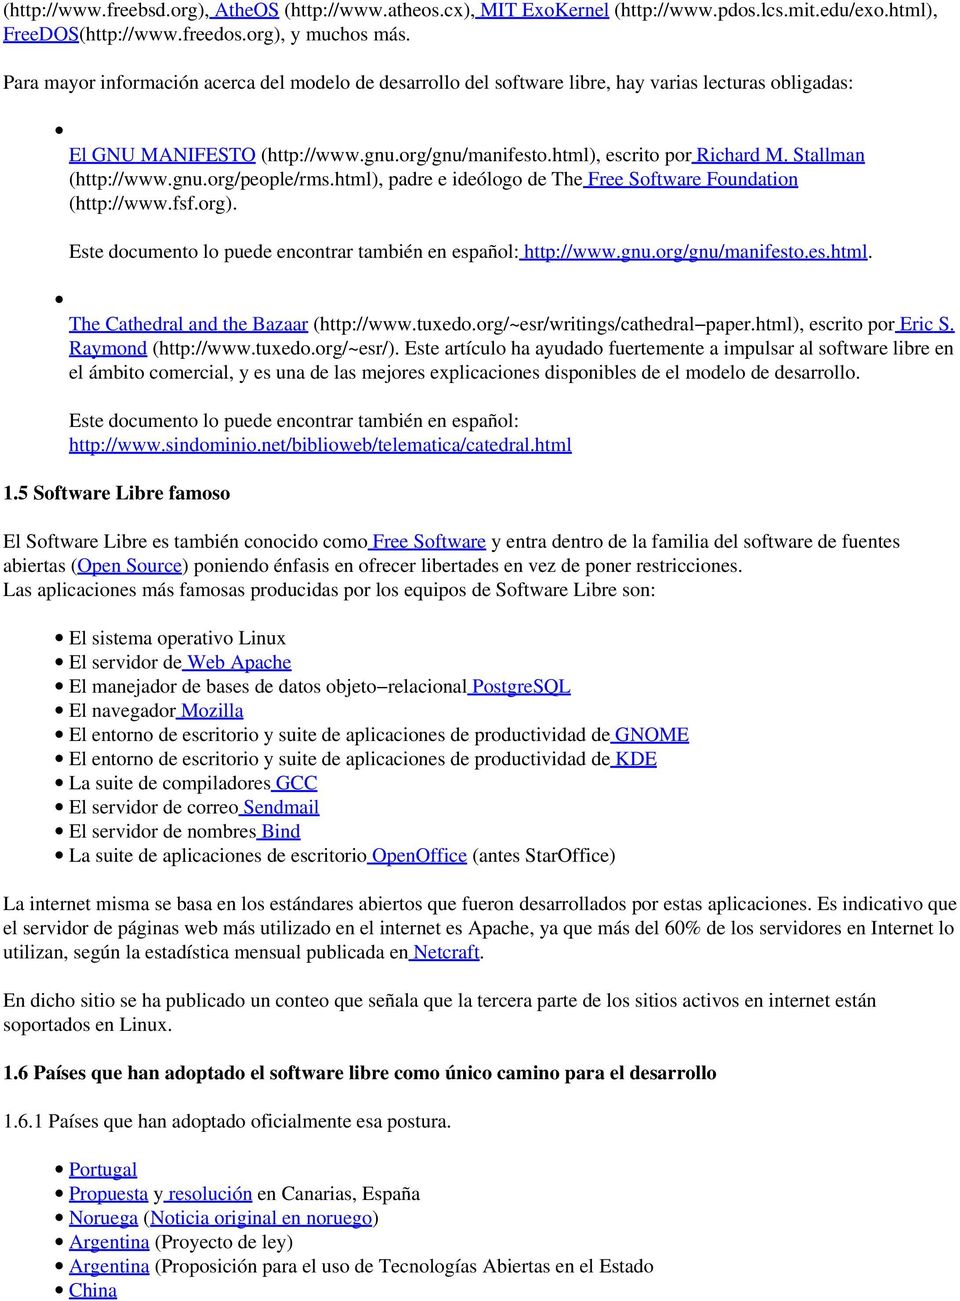 Stallman (http://www.gnu.org/people/rms.html), padre e ideólogo de The Free Software Foundation (http://www.fsf.org). Este documento lo puede encontrar también en español: http://www.gnu.org/gnu/manifesto.